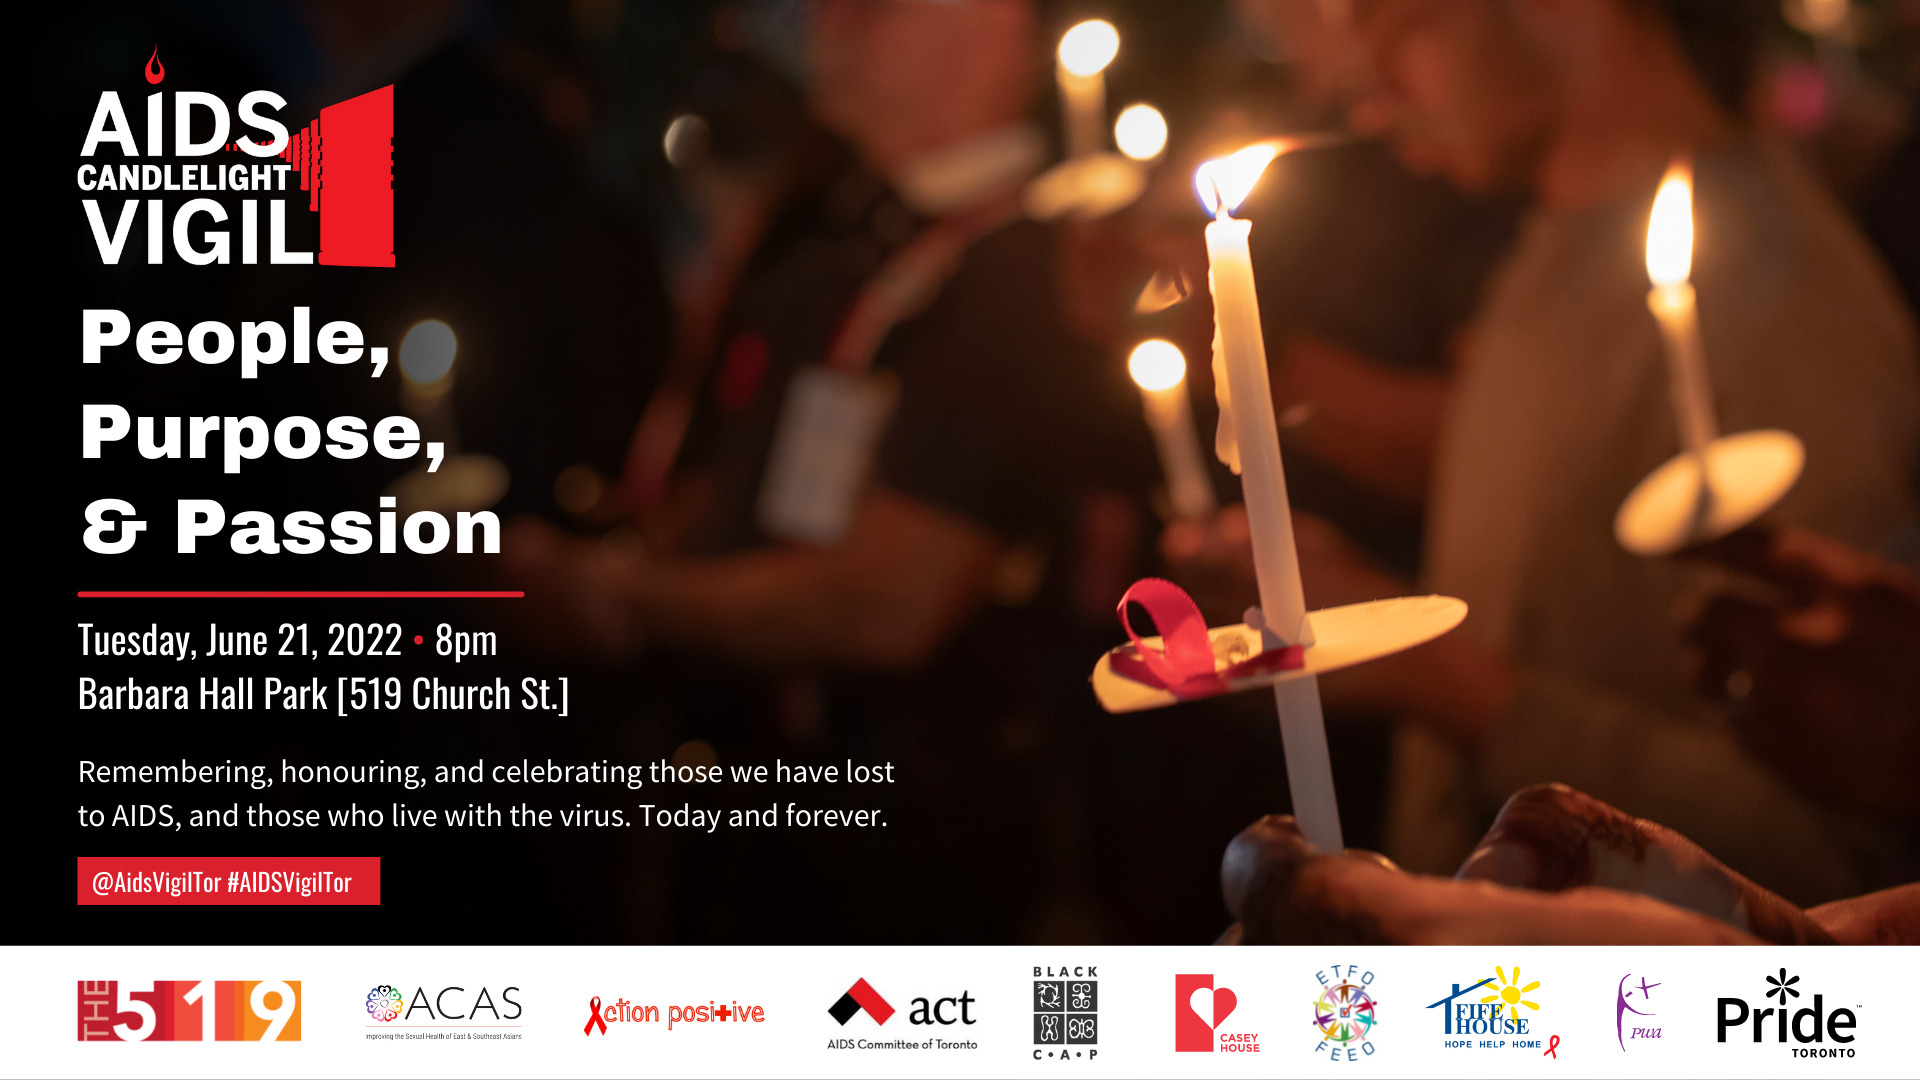 AIDs Candlelight Vigil Event